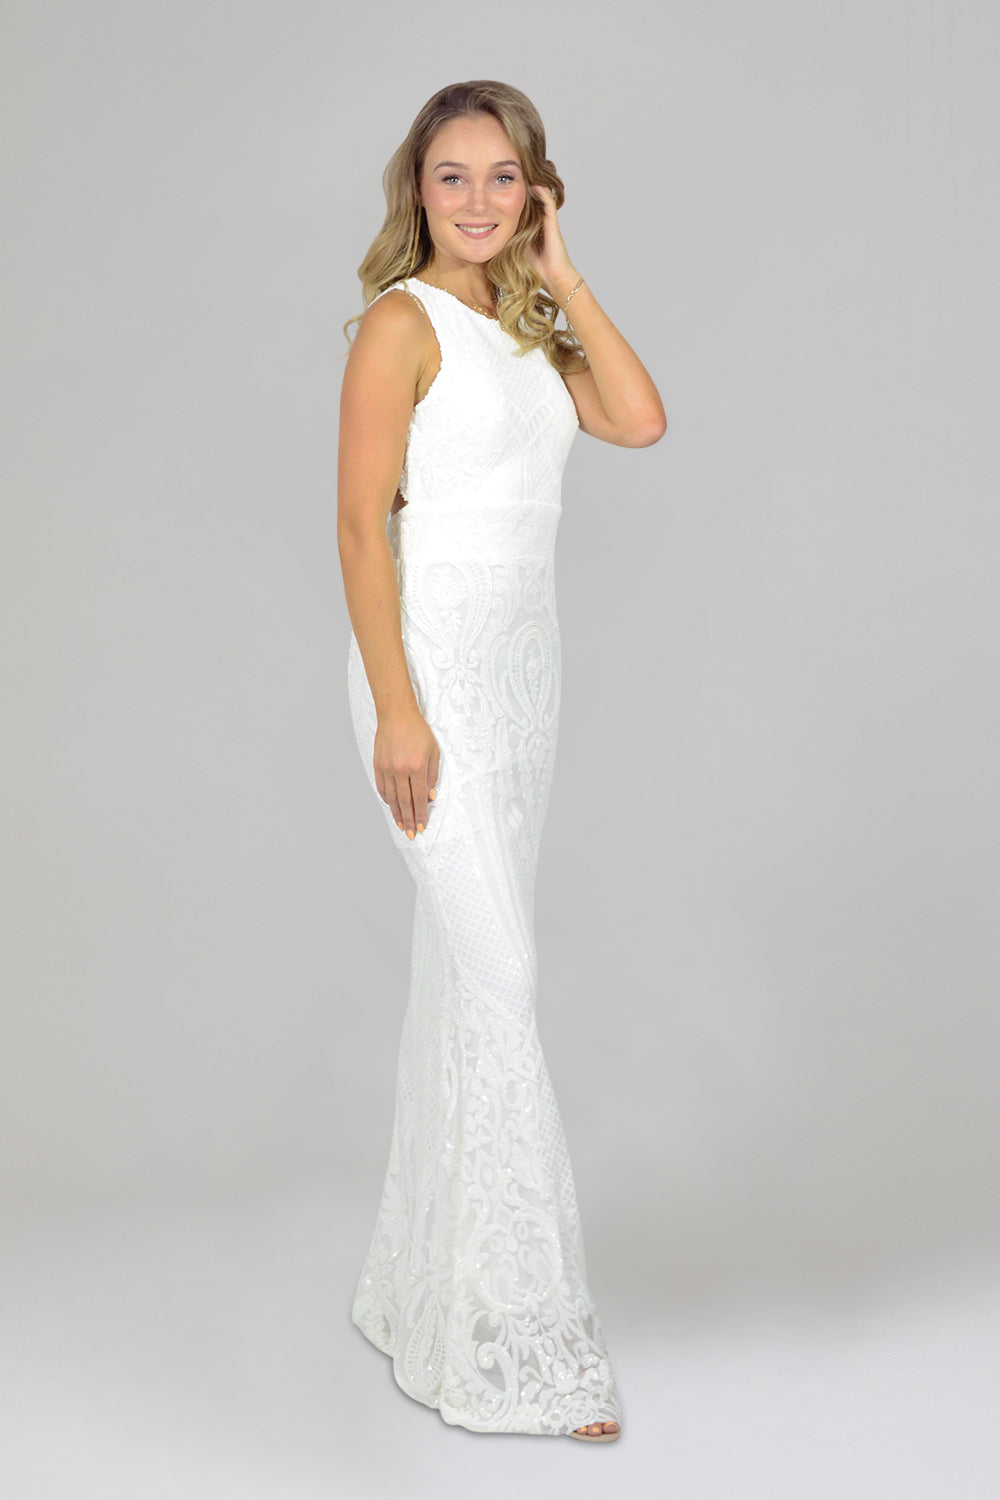 white sequin formal ball dresss perth australia envious bridal & formal